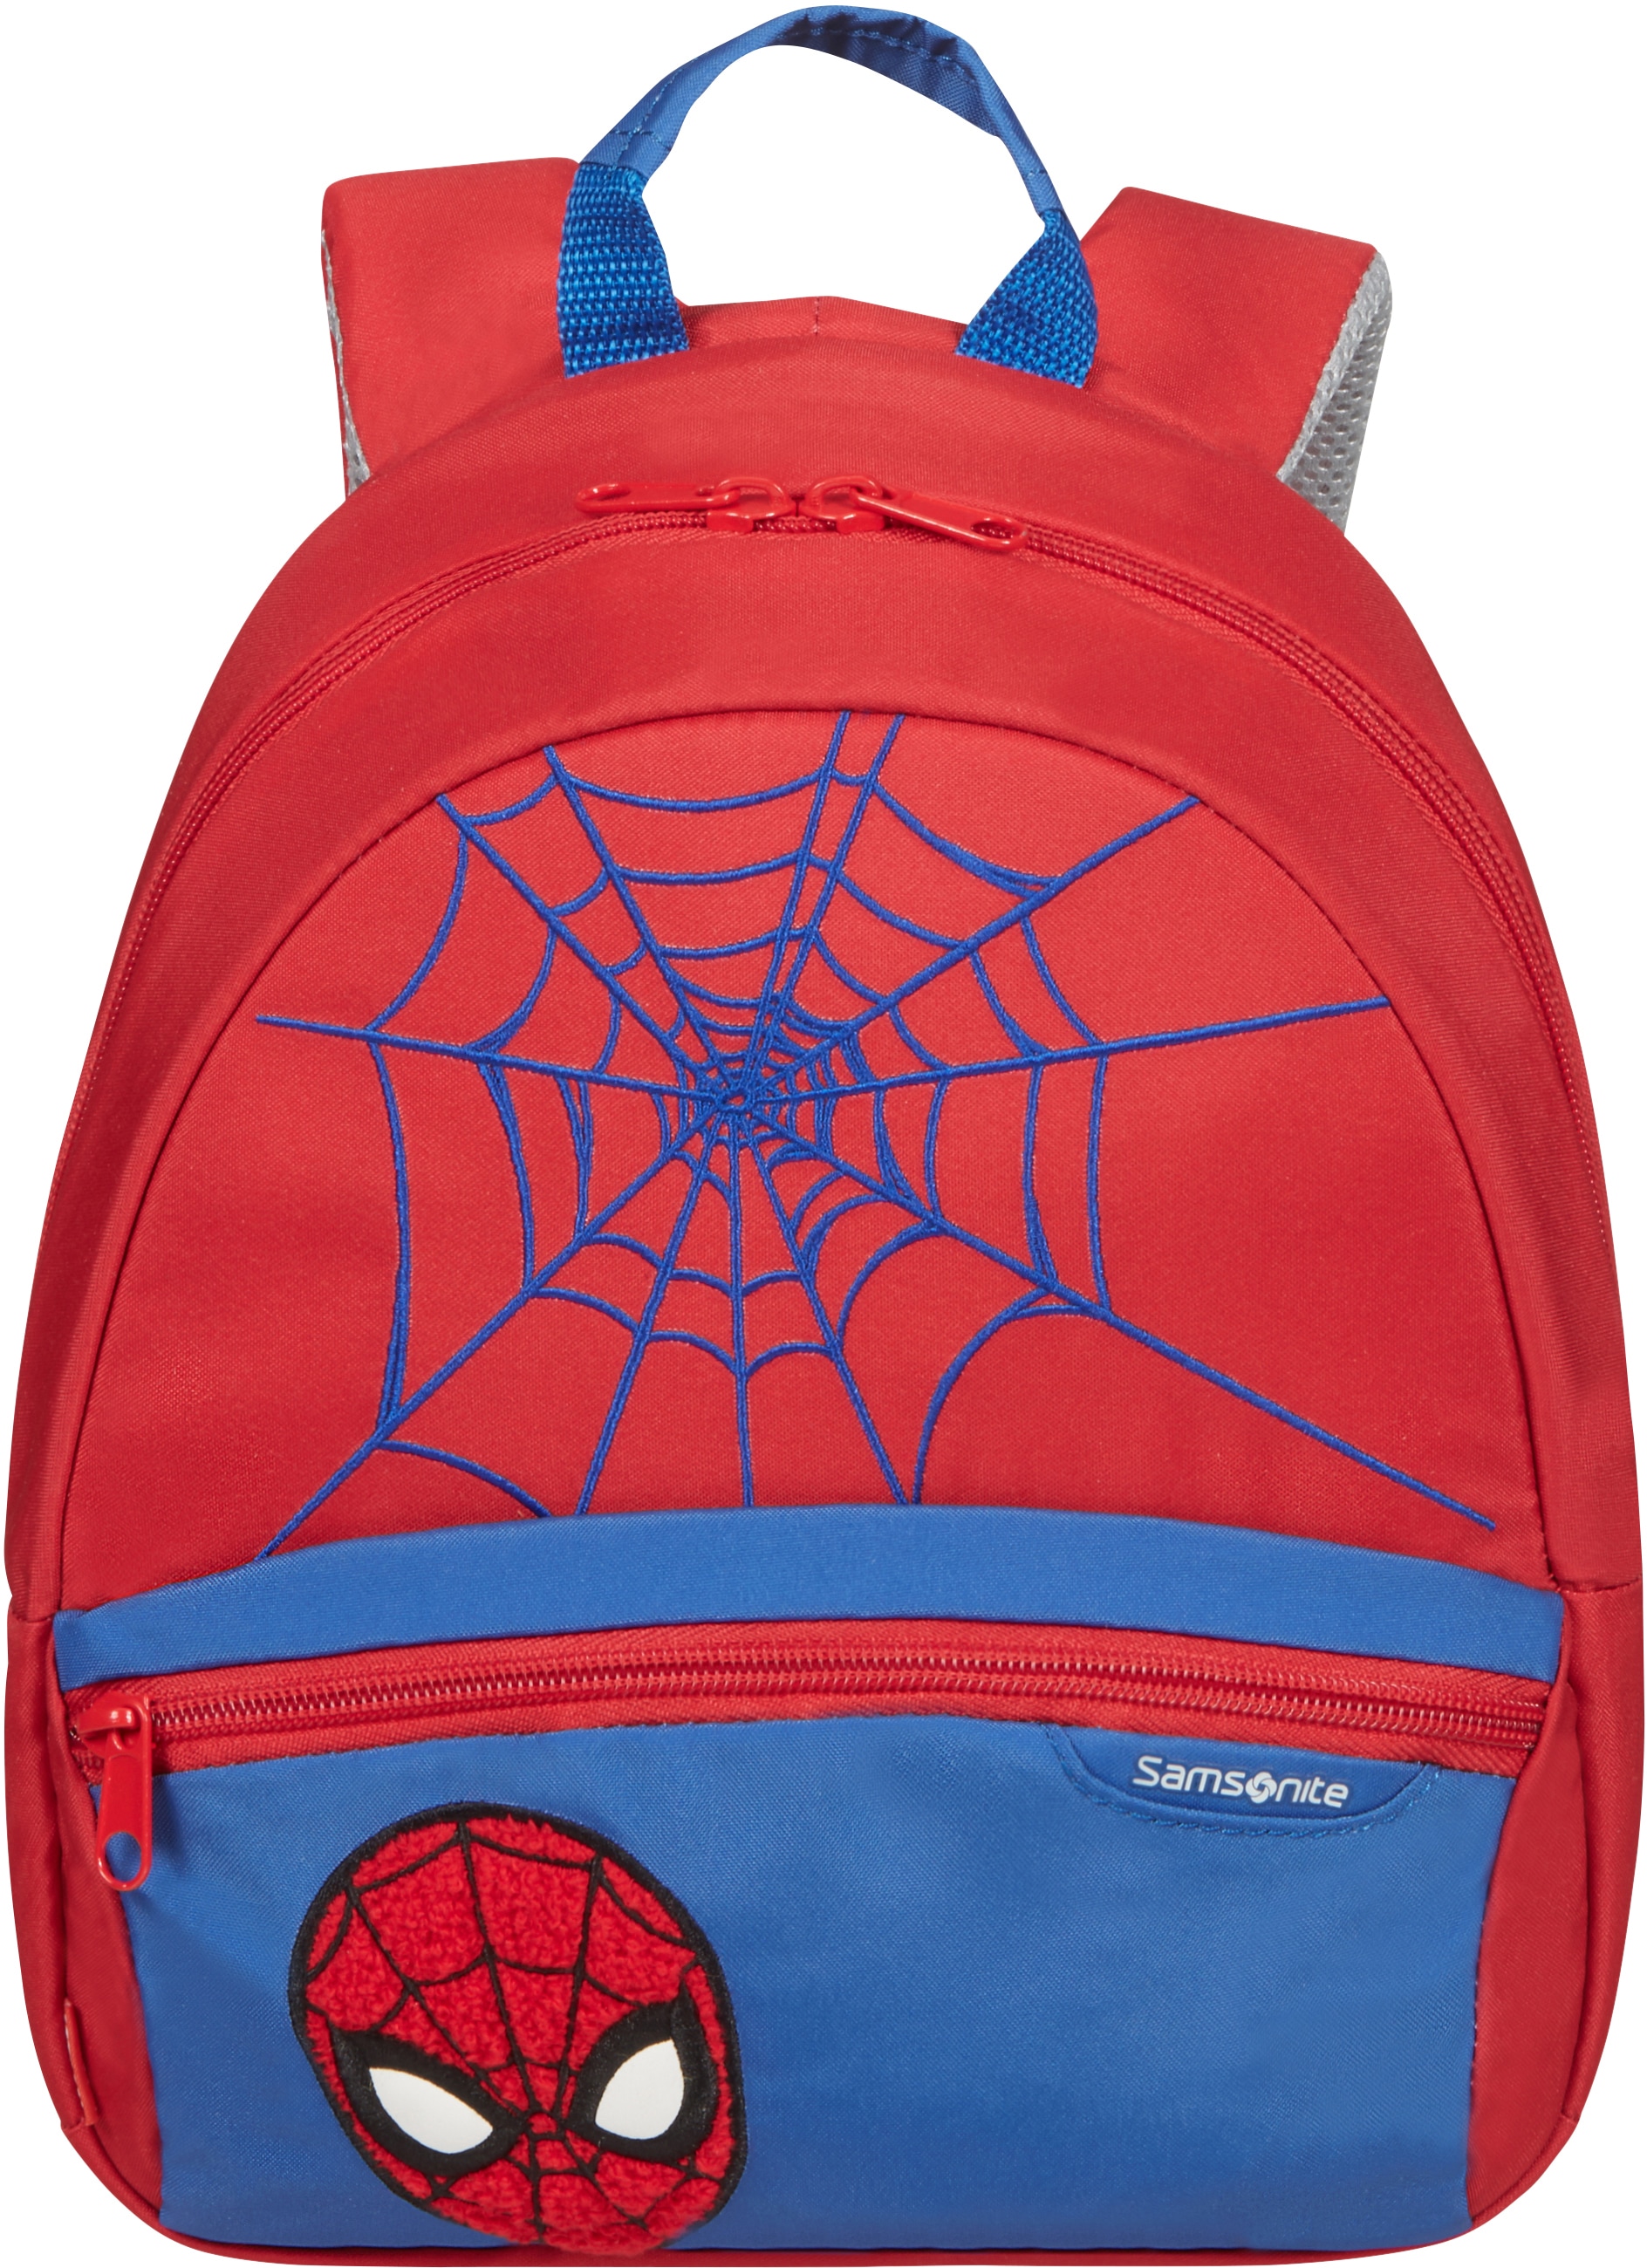 Details Ultimate 2.0, Samsonite S, online »Disney reflektierende Spiderman«, Kinderrucksack bestellen